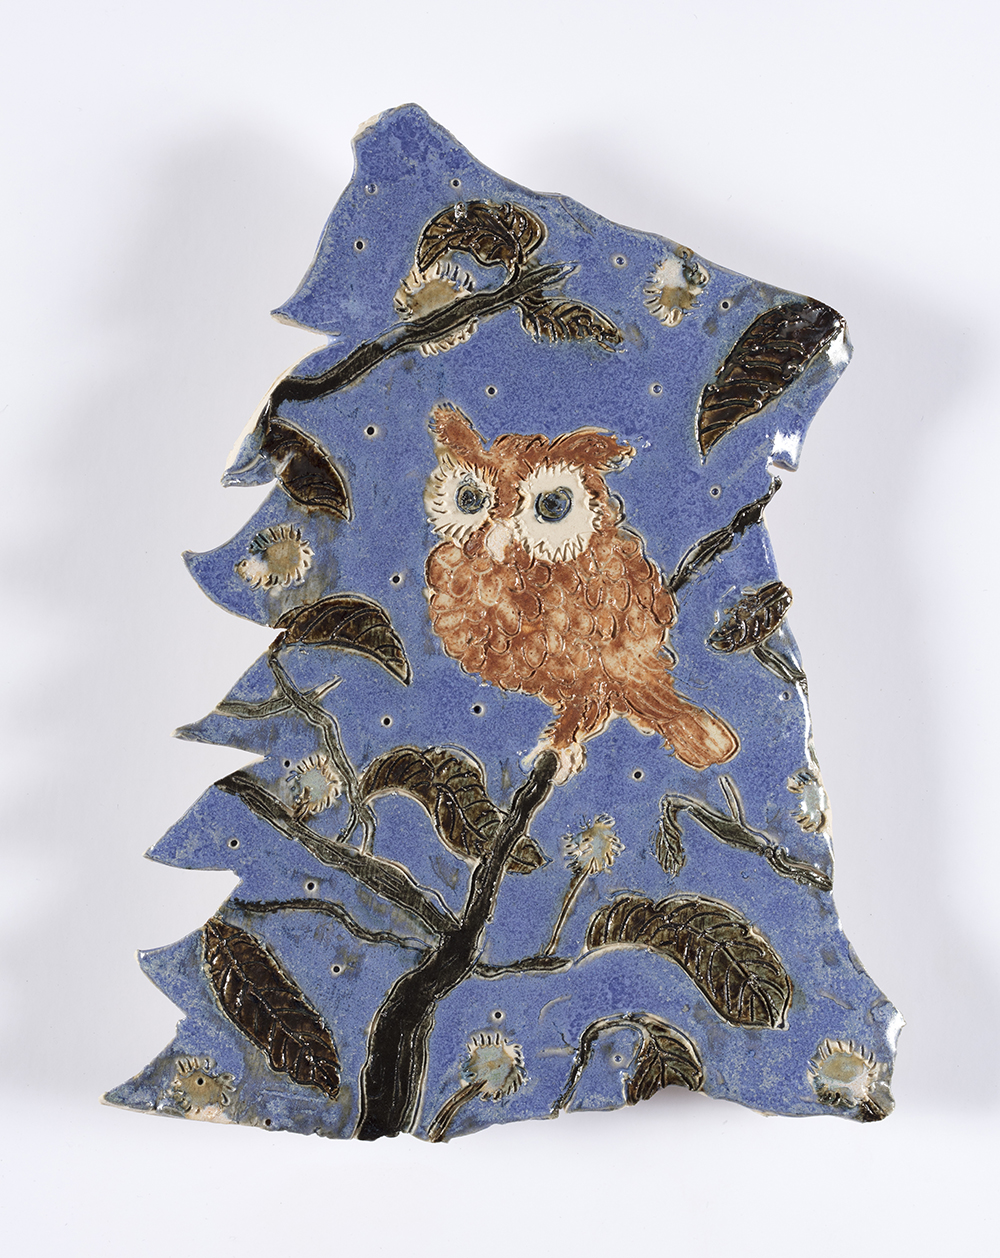 Kevin McNamee-Tweed. <em>Perch (Owl)</em>, 2019. Glazed ceramic, 6 3/4 x 5 inches  (17.1 x 12.7 cm)